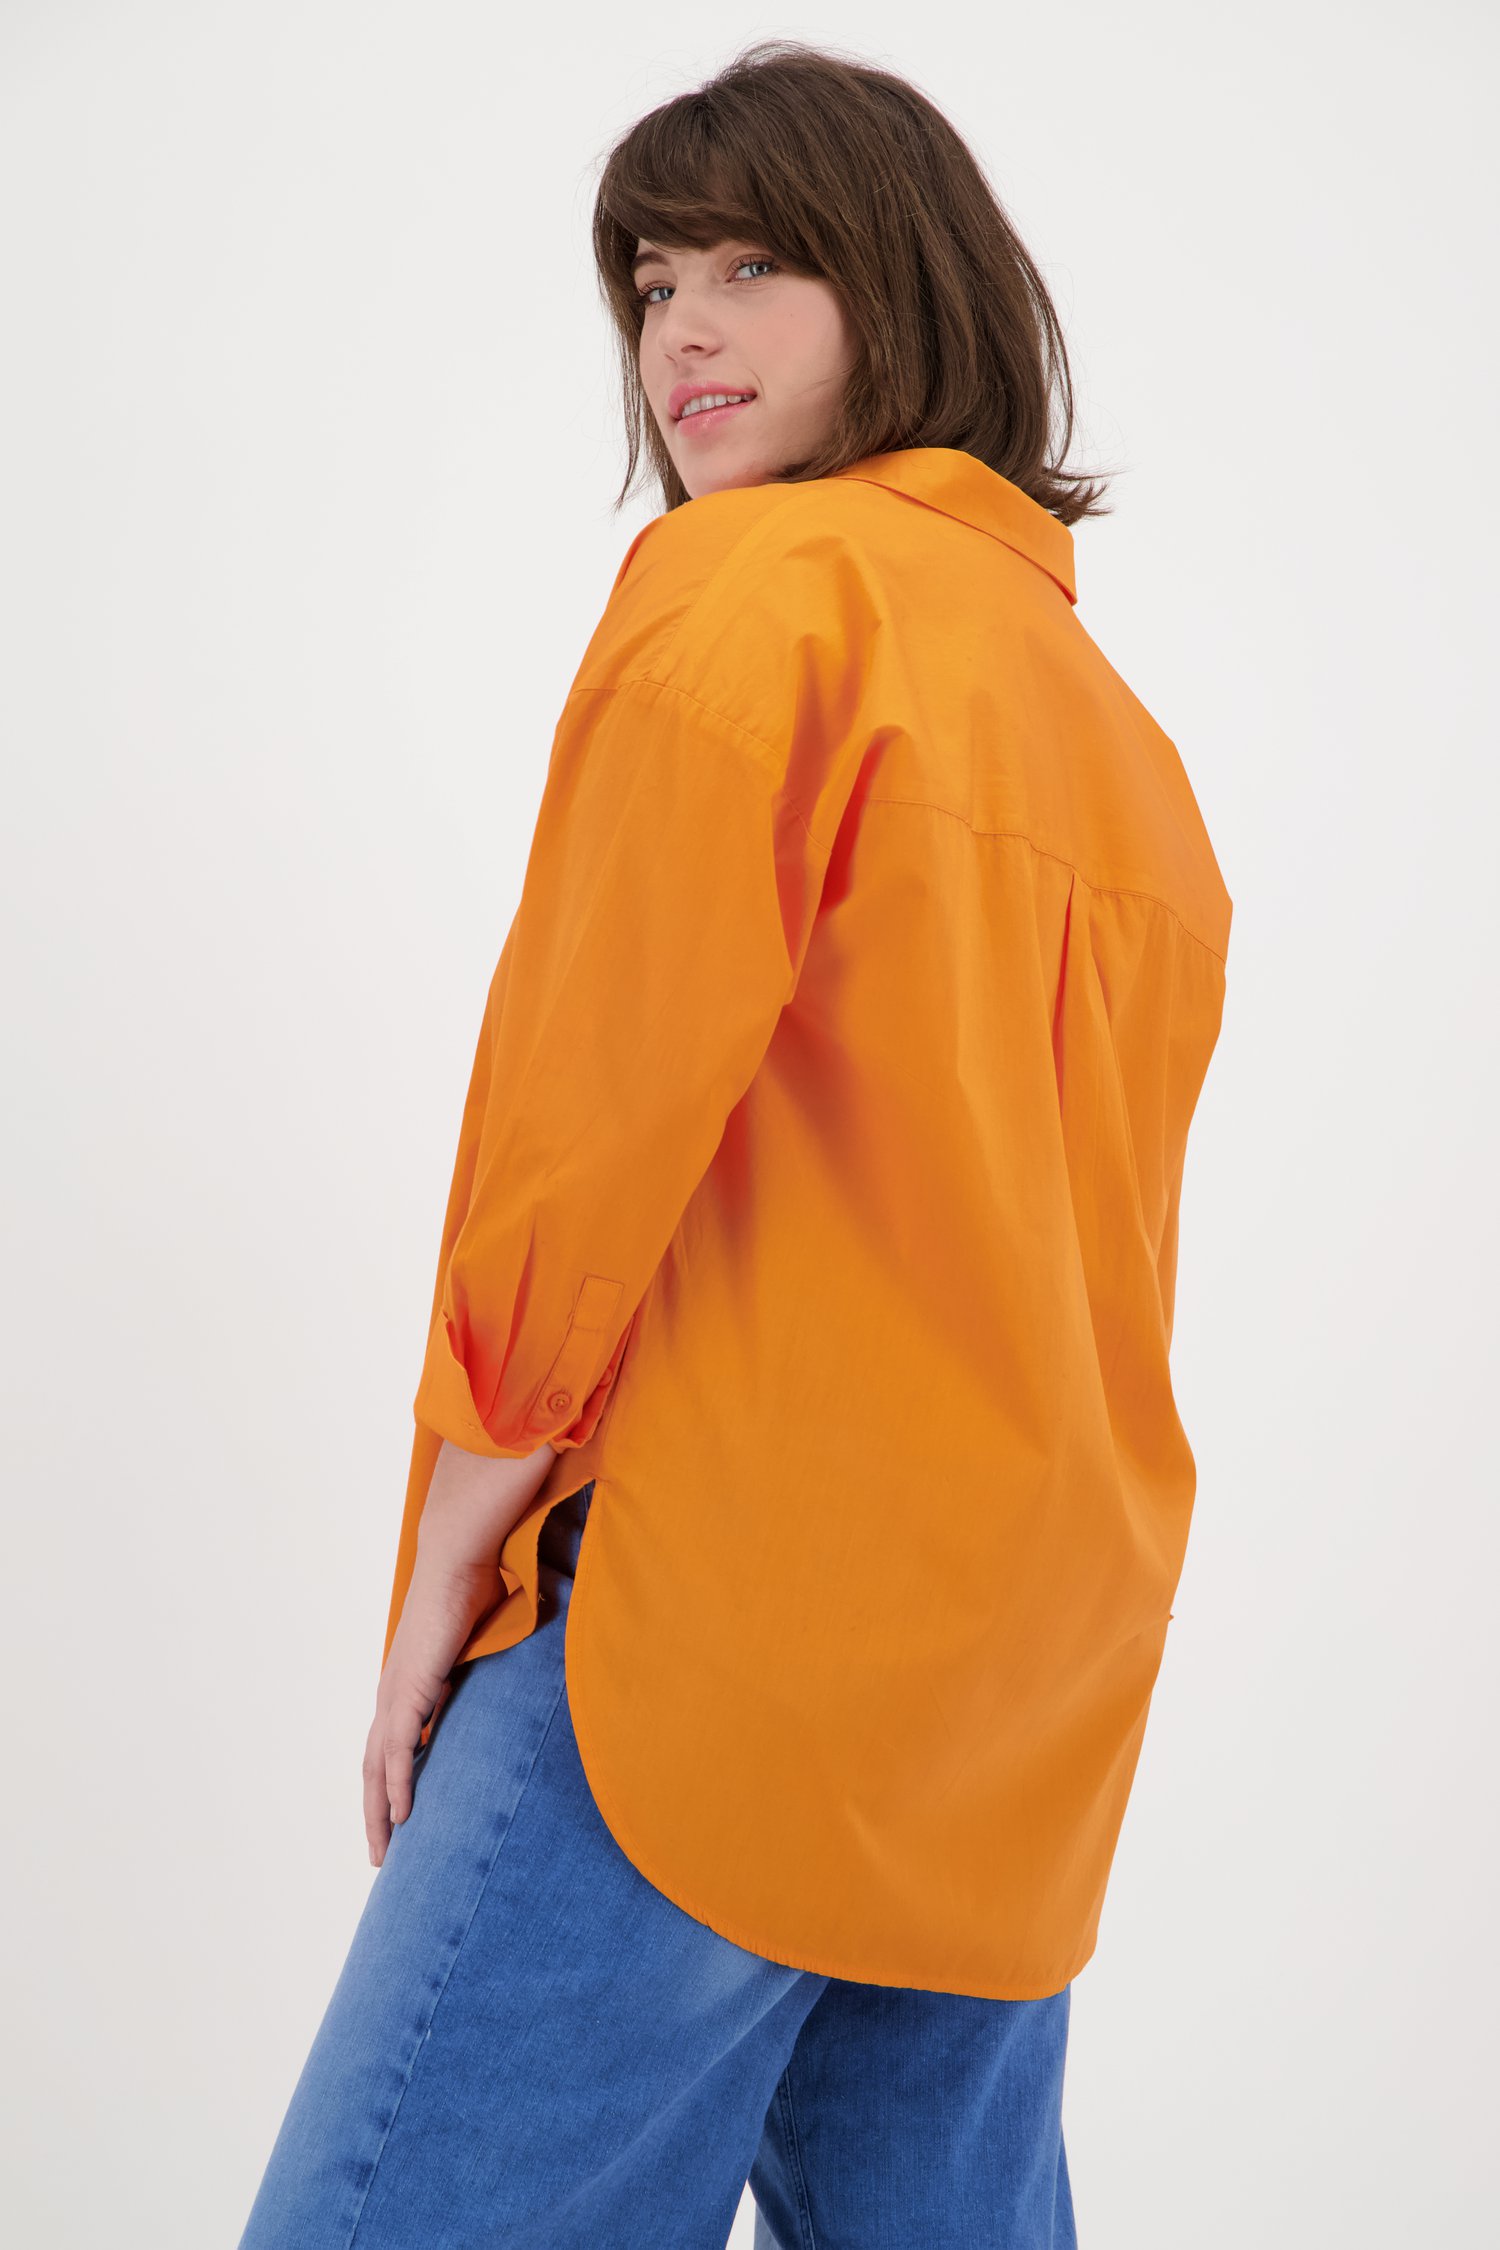 Oranje blouse  van Only Carmakoma voor Dames